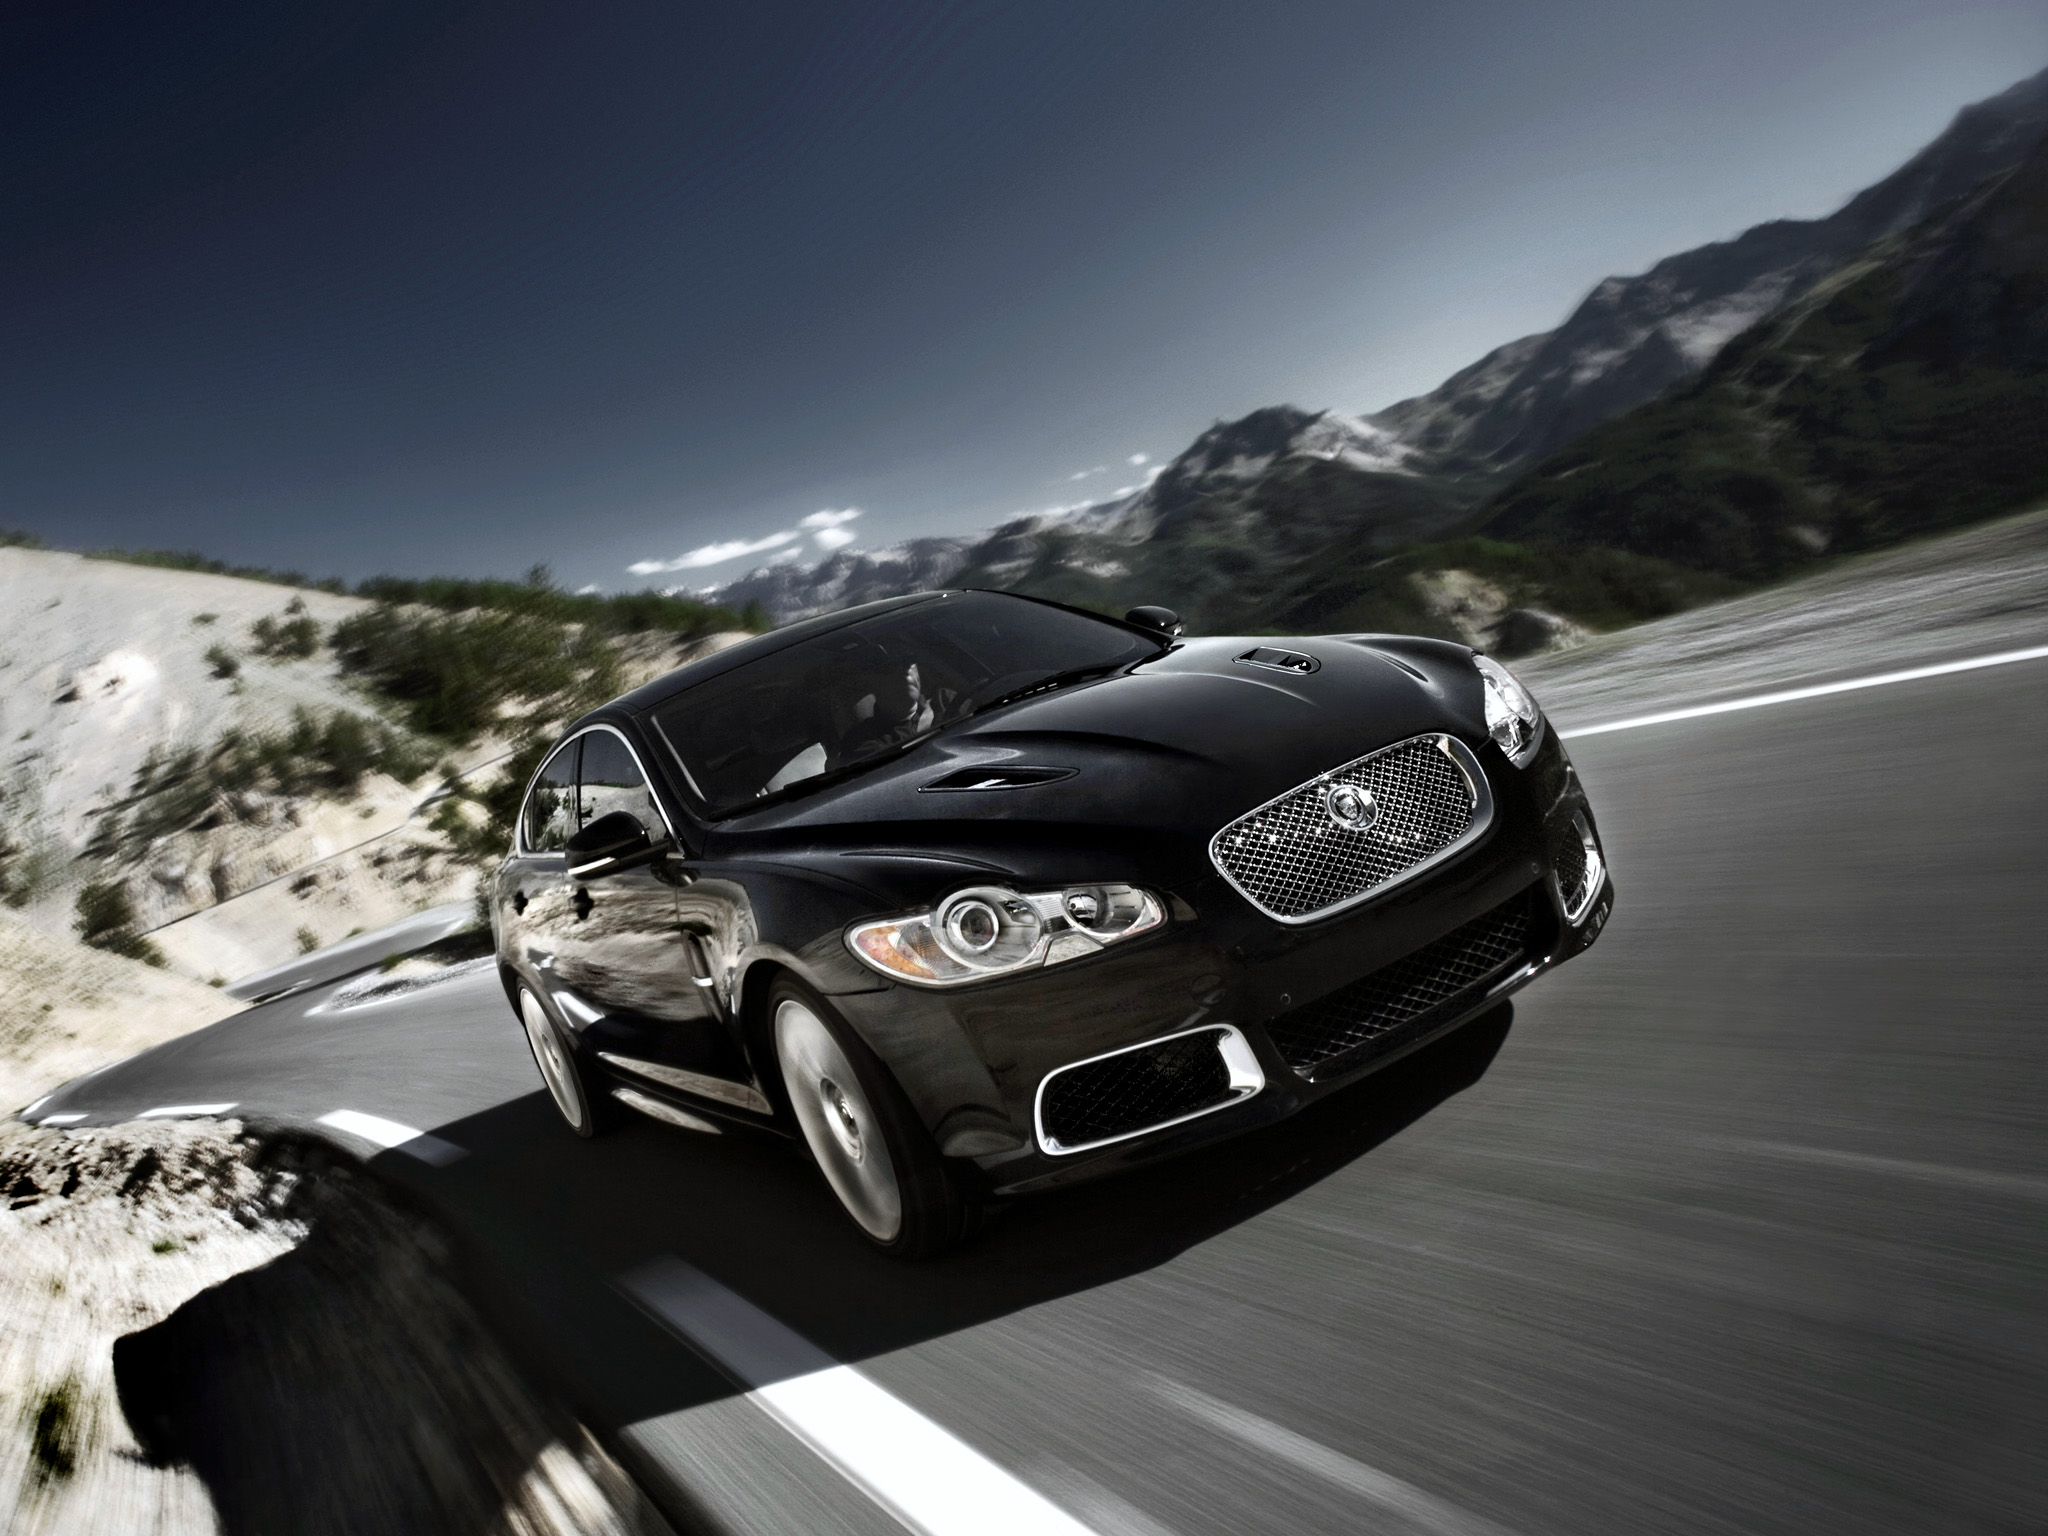  2010 Jaguar XFR Wallpaper.